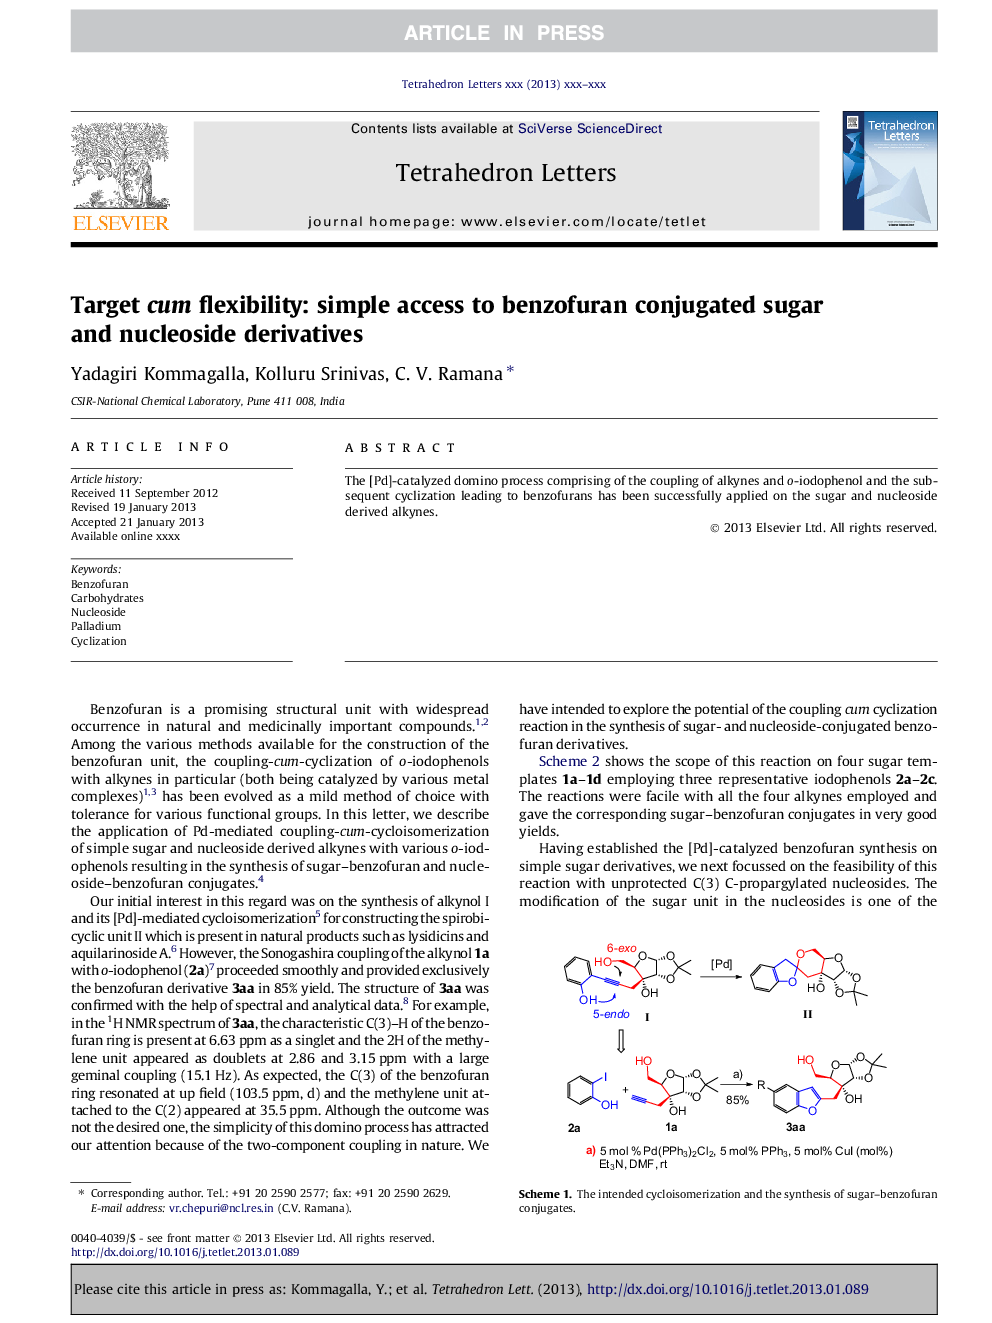 Target cum flexibility: simple access to benzofuran conjugated sugar and nucleoside derivatives